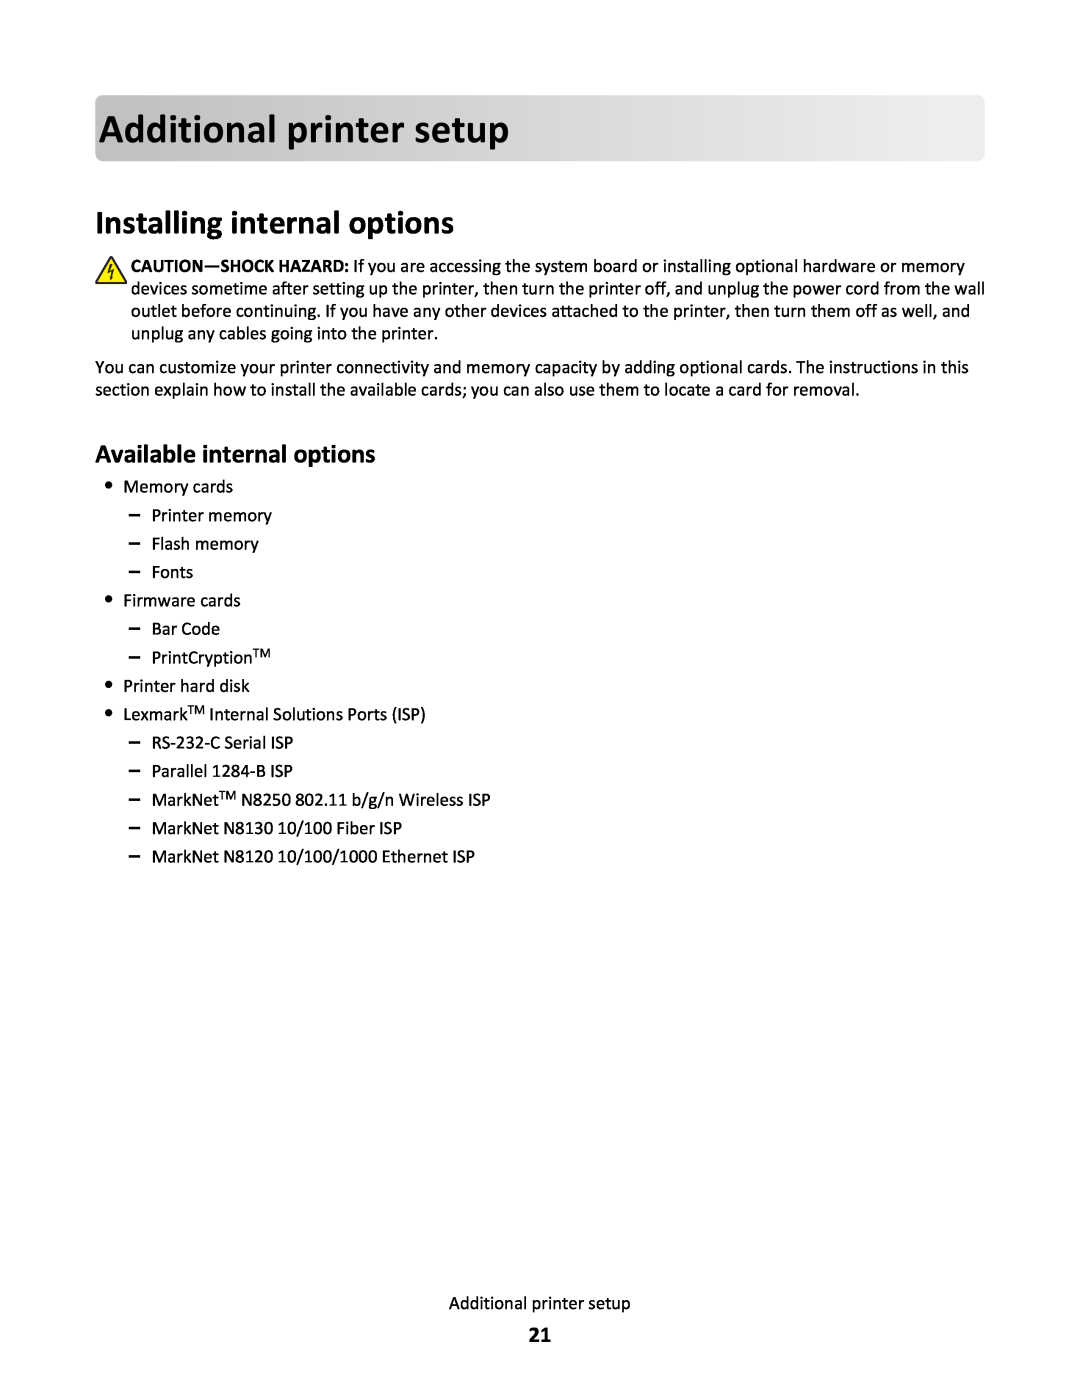 Lexmark C790 manual Additionalprintersetup, Installing internal options, Available internal options 